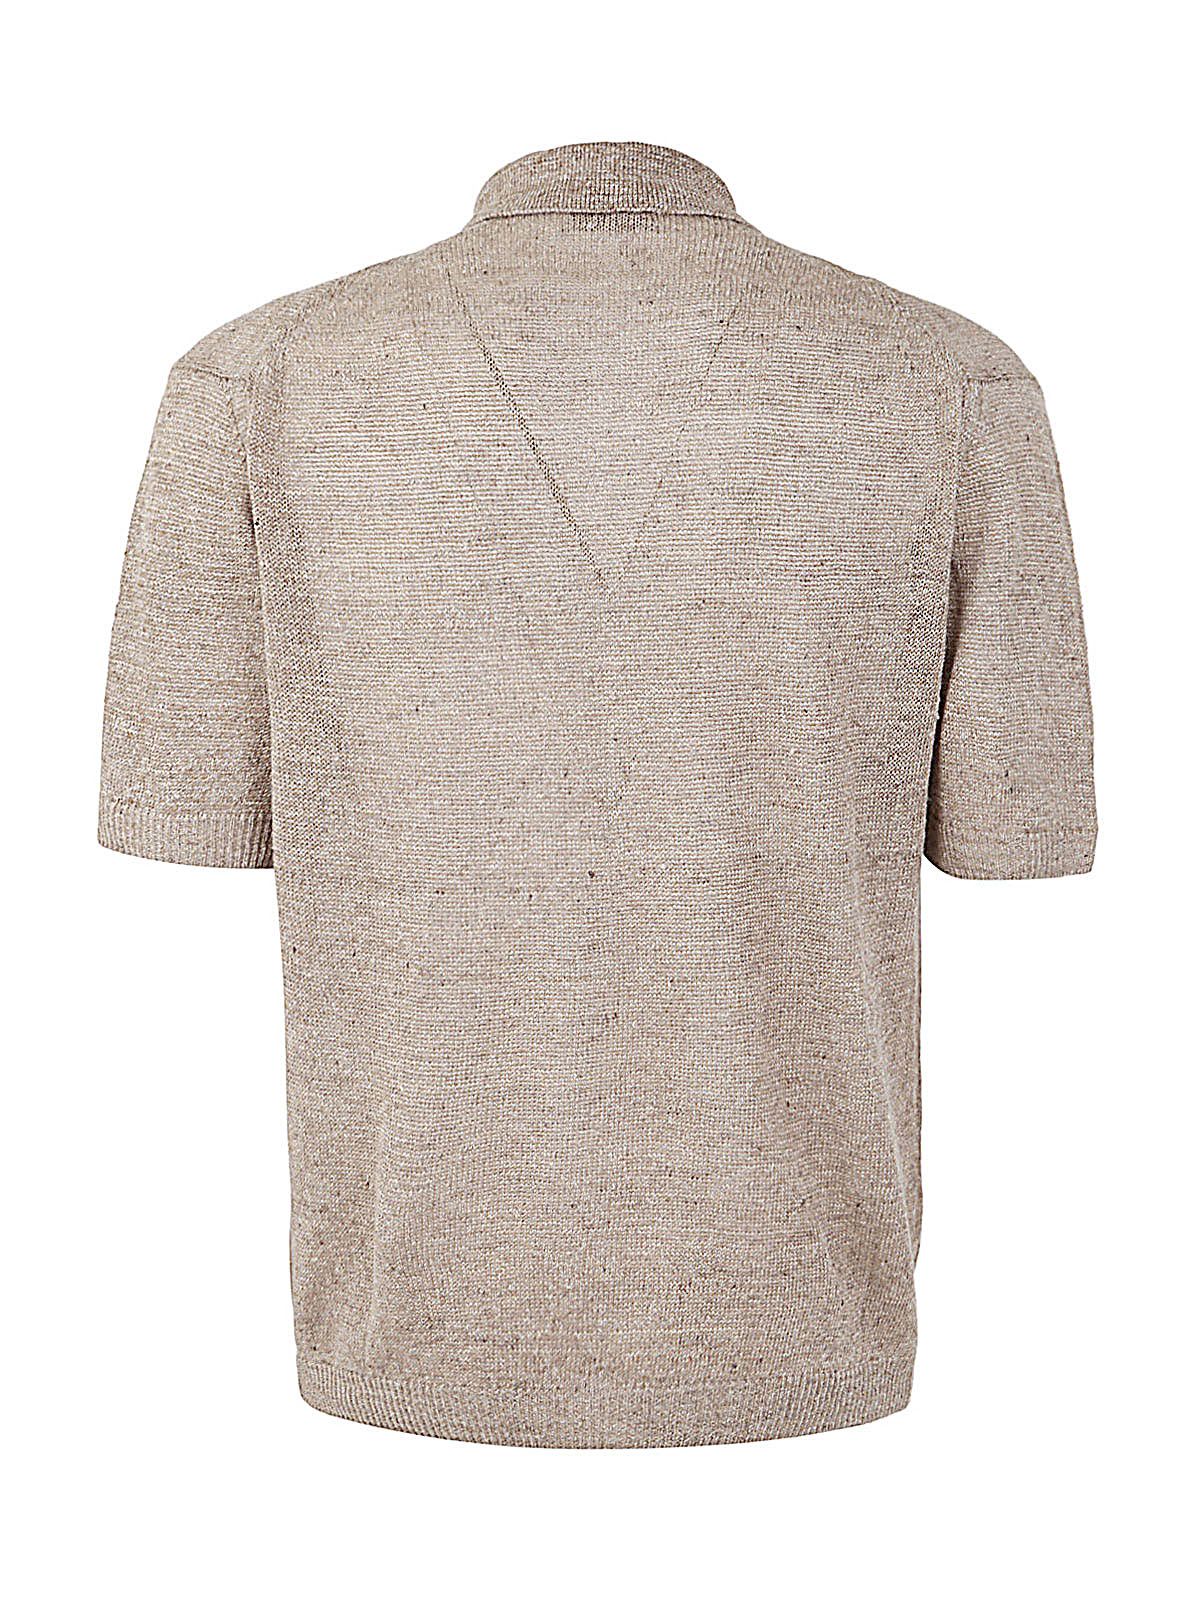 Shop Filippo De Laurentiis Mens Linen Shirt: Short Sleeve Over